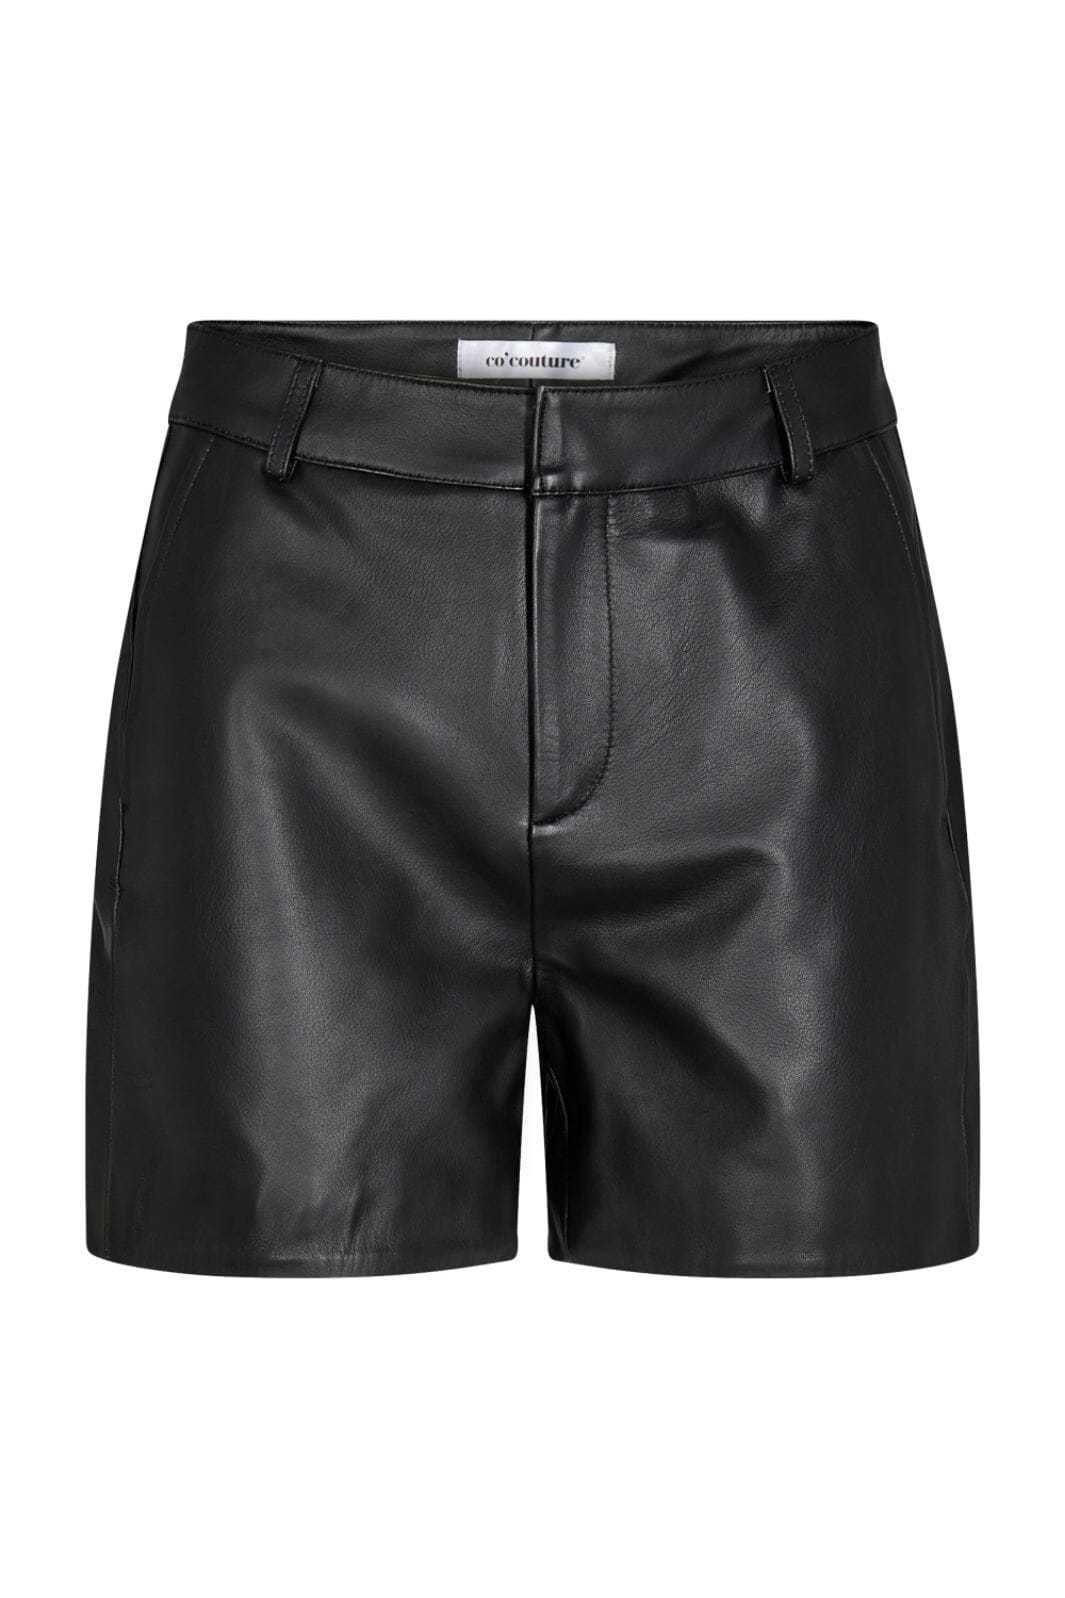 Co´couture - Phoebecc Midi Leather Shorts - 96 Black Shorts 